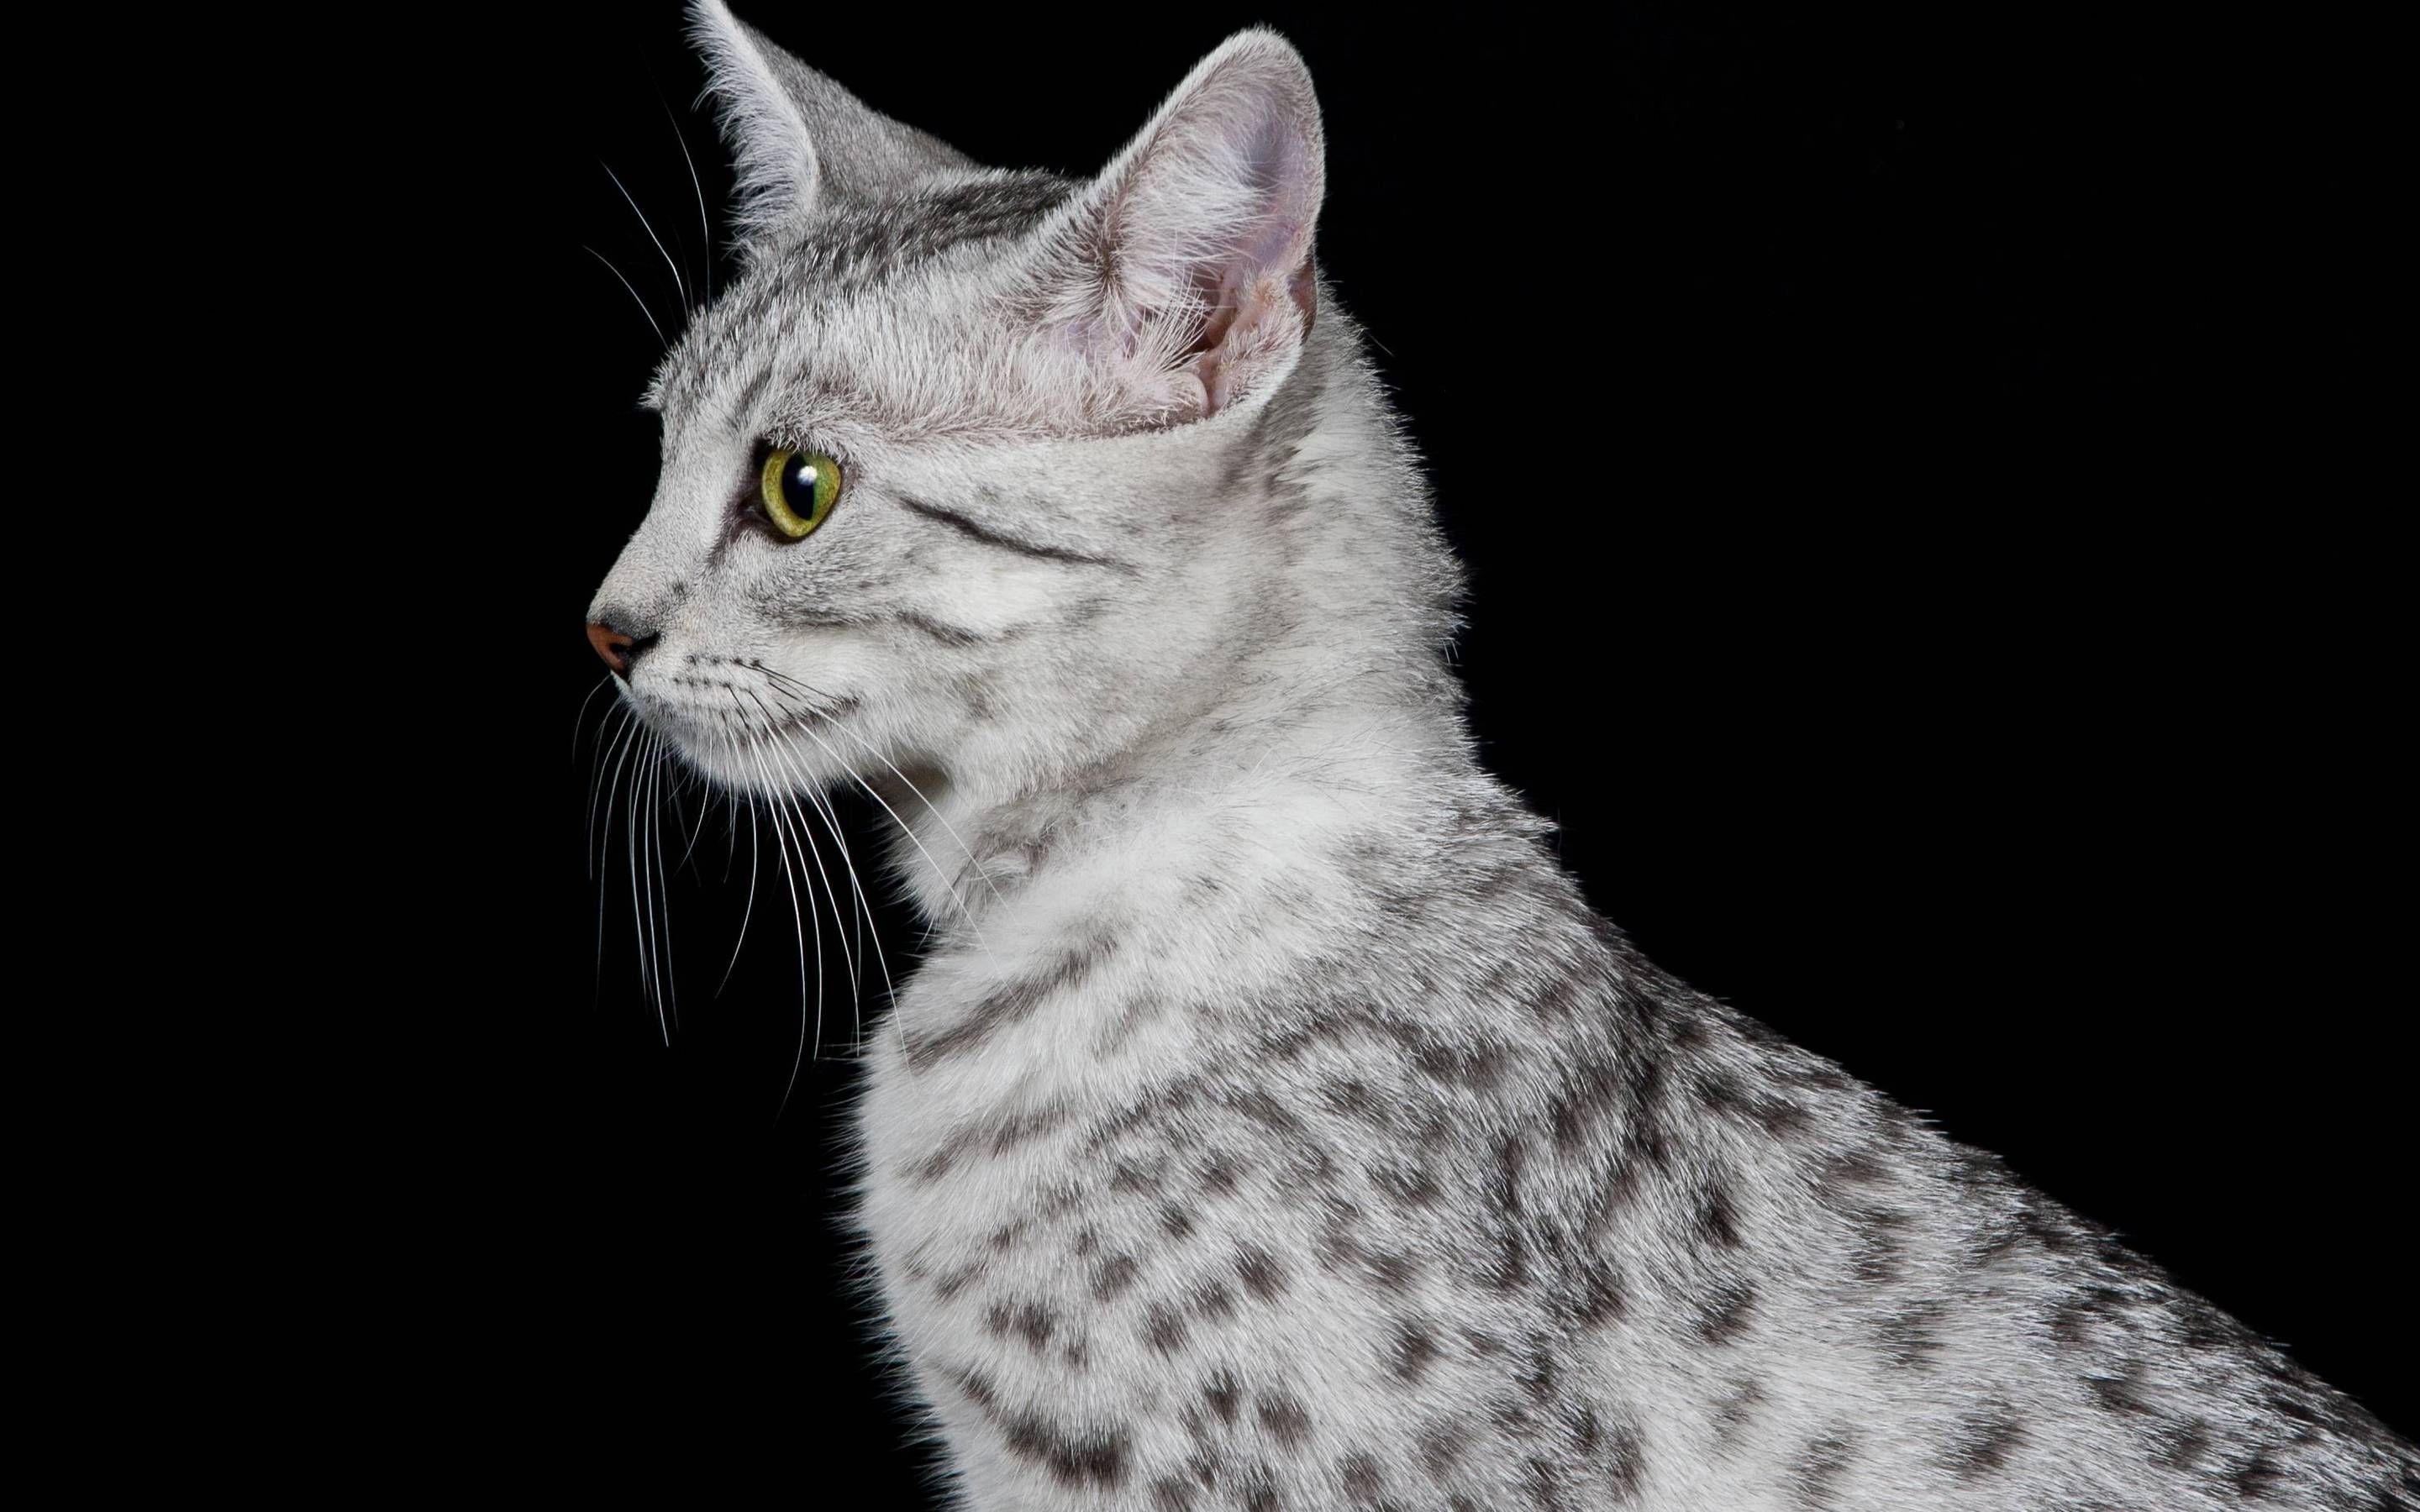 Egyptian Mau Cat Profile Look for 2880 x 1800 Retina Display resolution